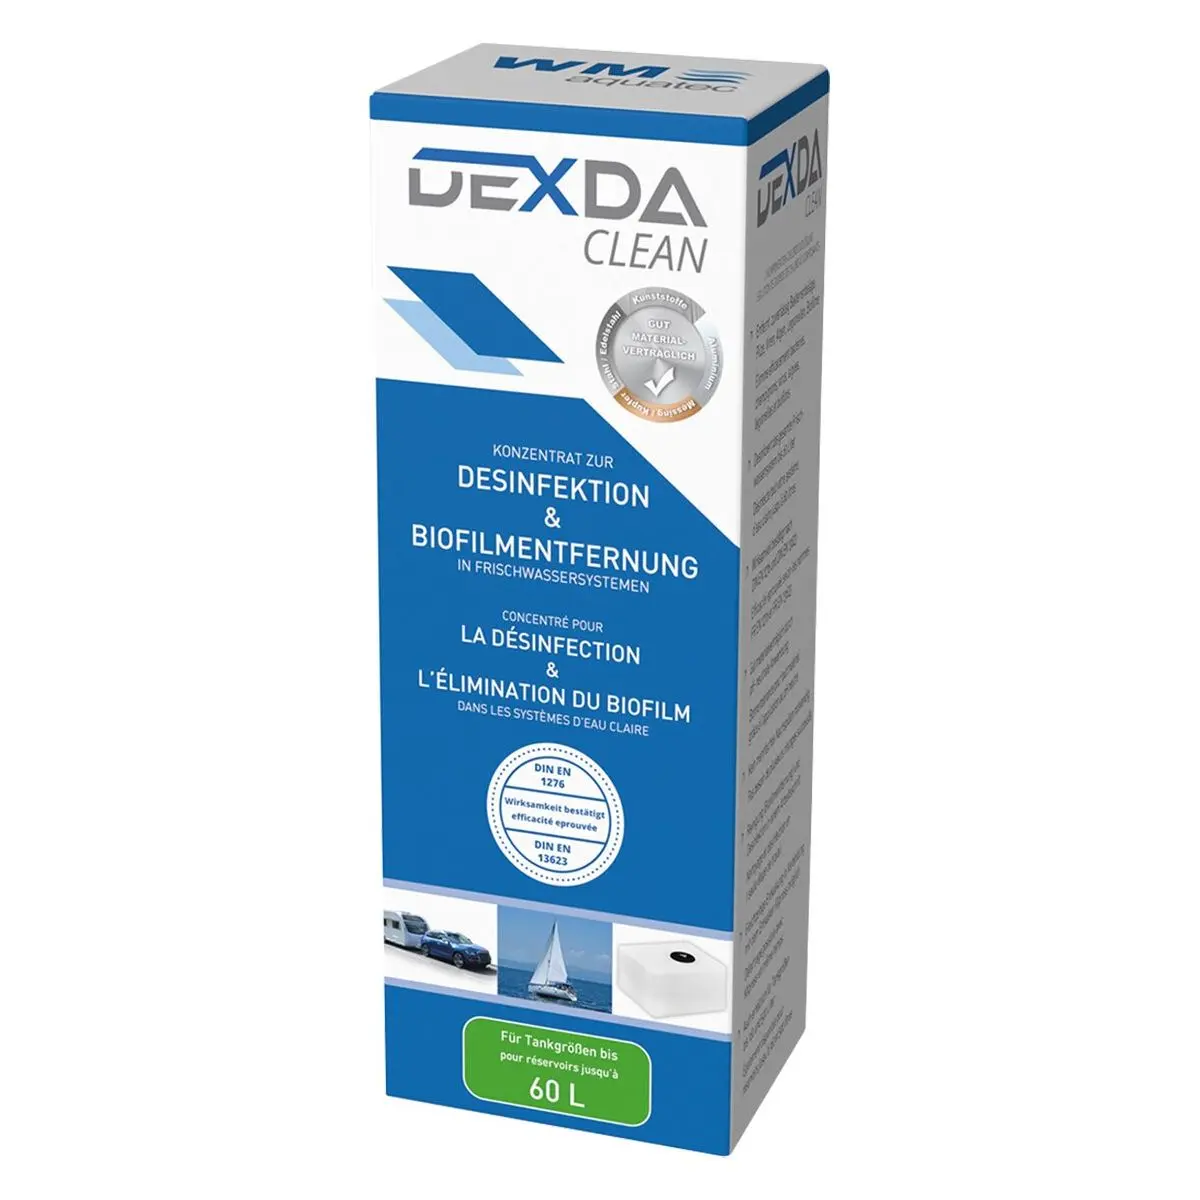 Dexda Clean - volum rezervor 60 litri